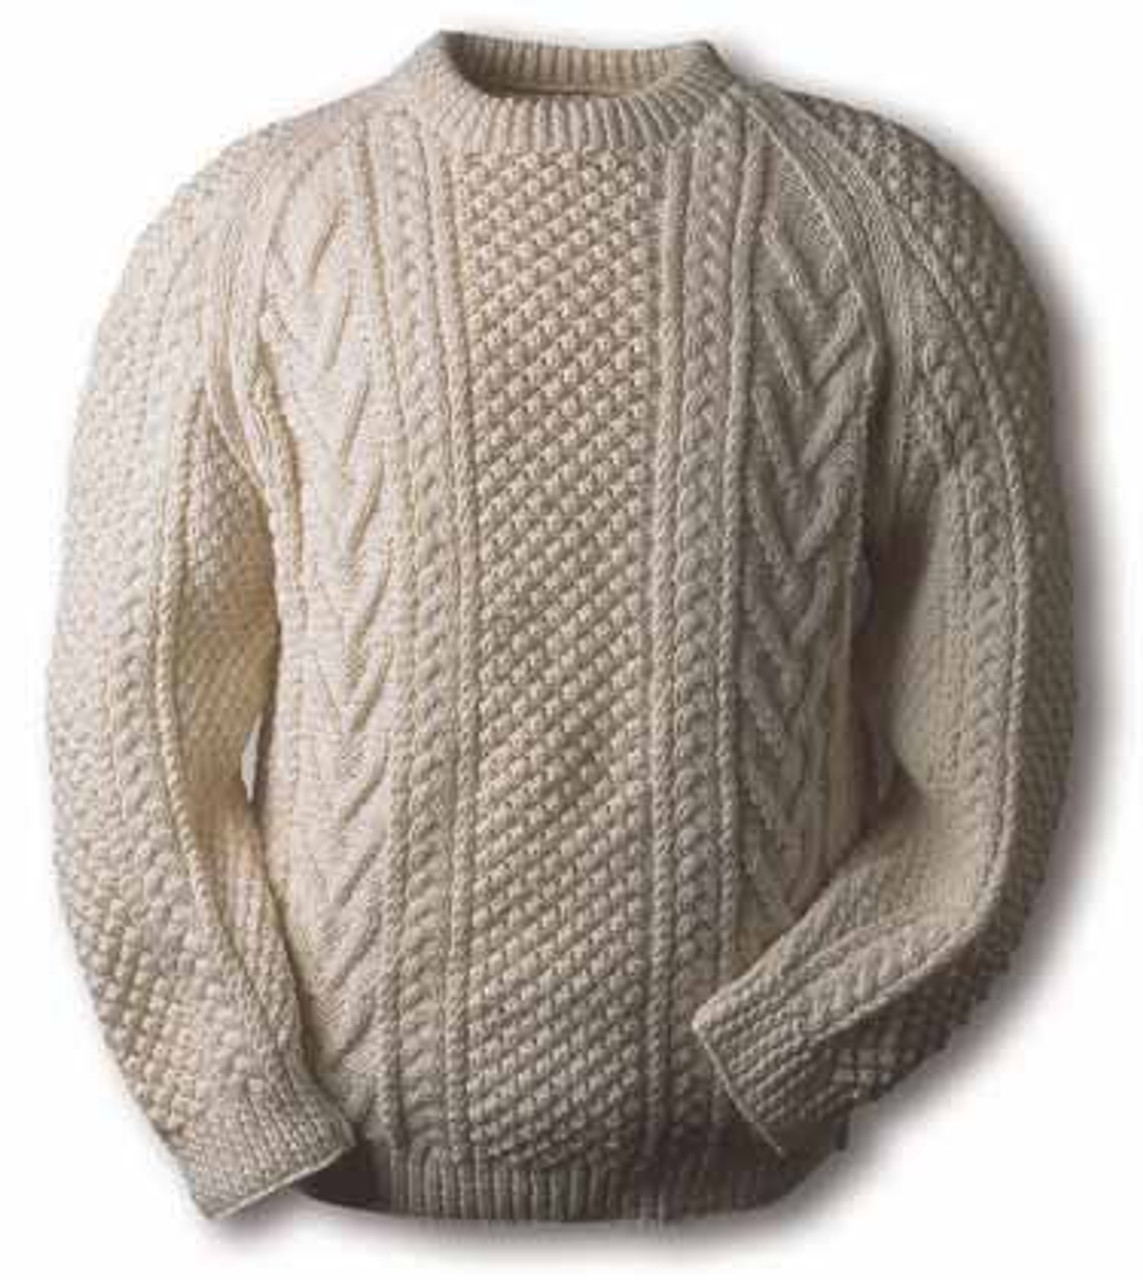 Brady Knitting Kit